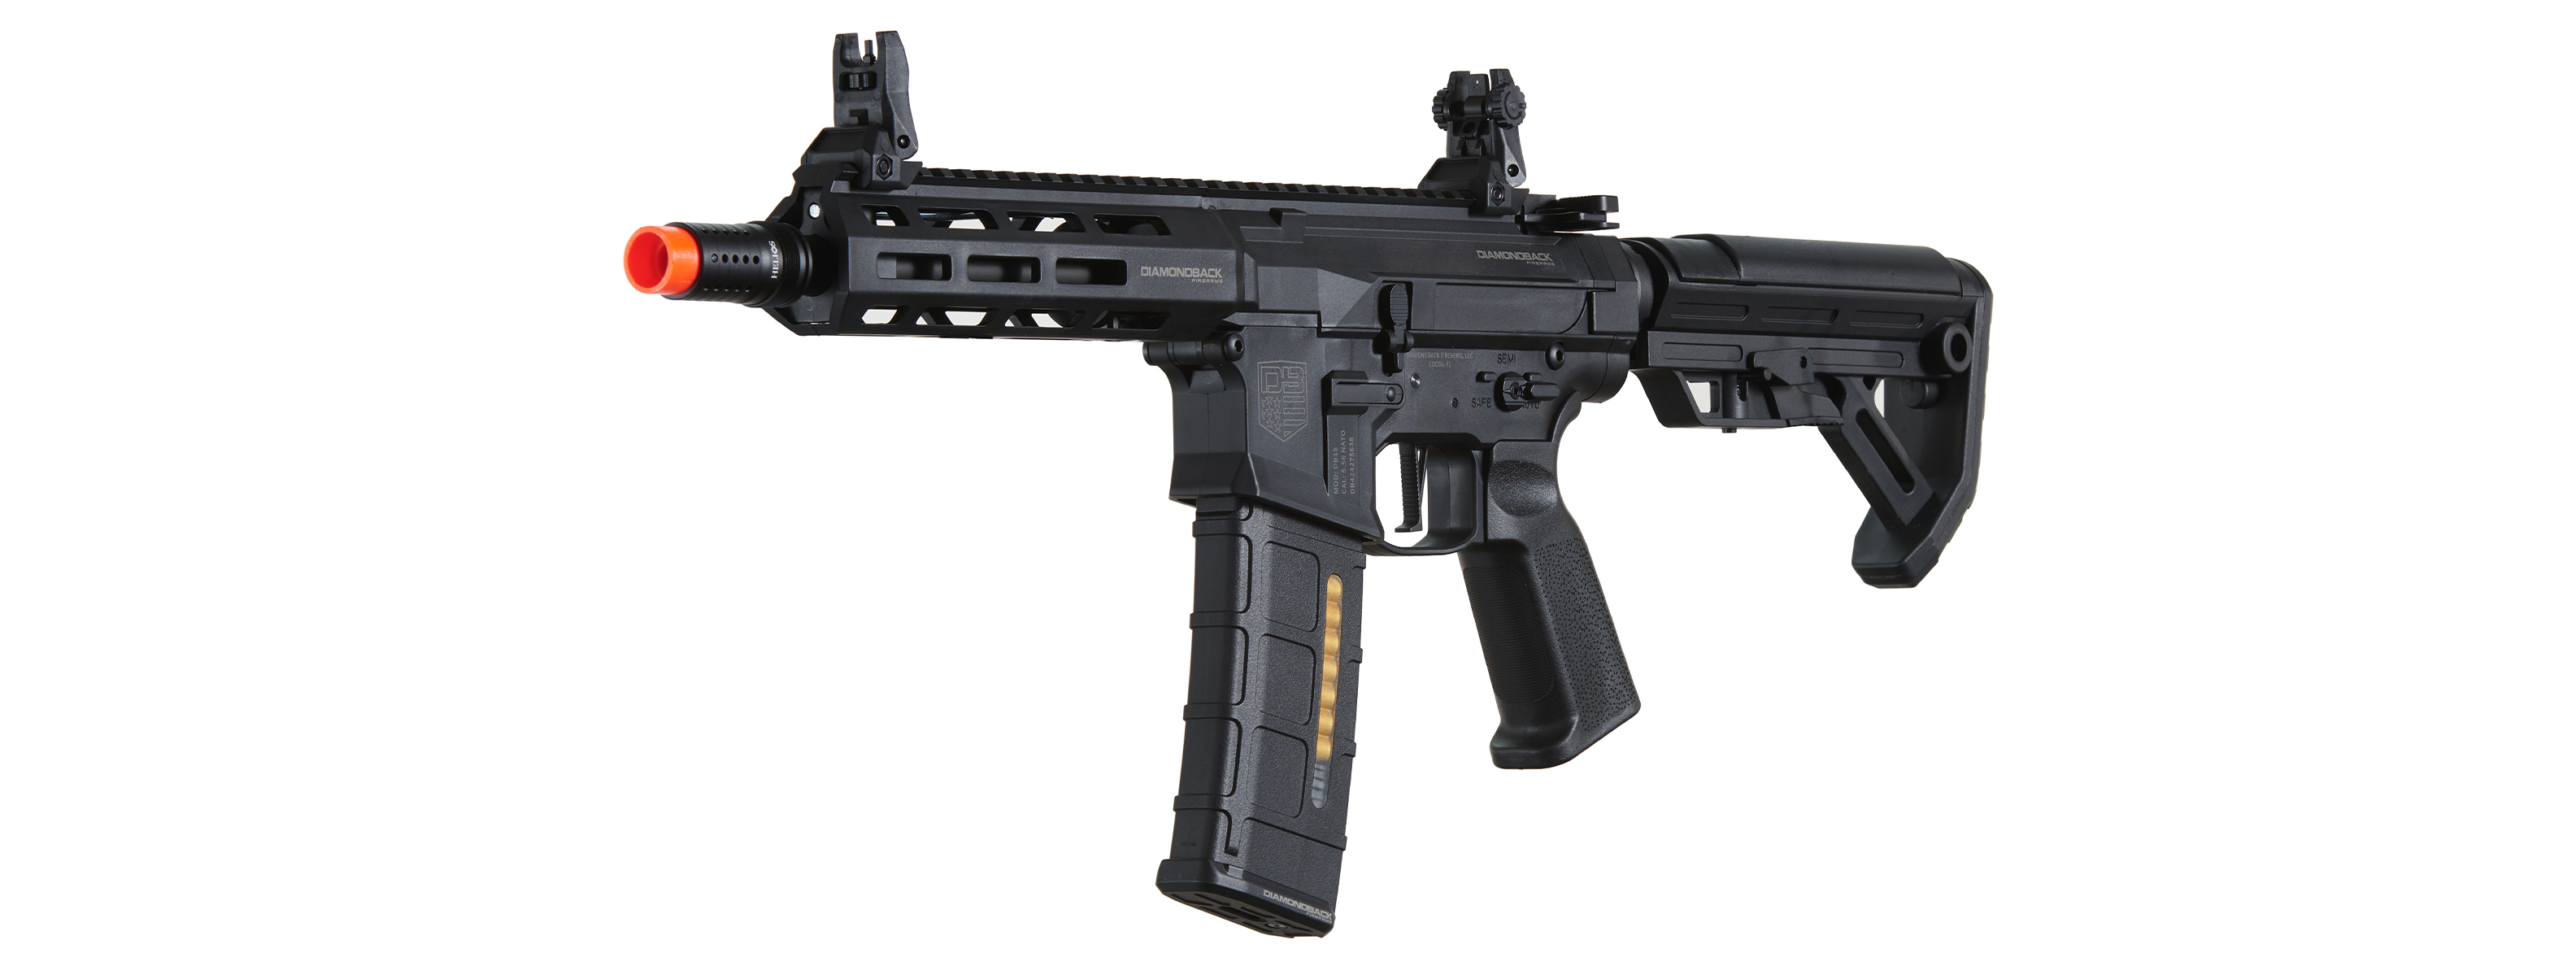 Bo Manufacturer Diamondback Licensed DB15 AP305 7" Airsoft AEG Rifle